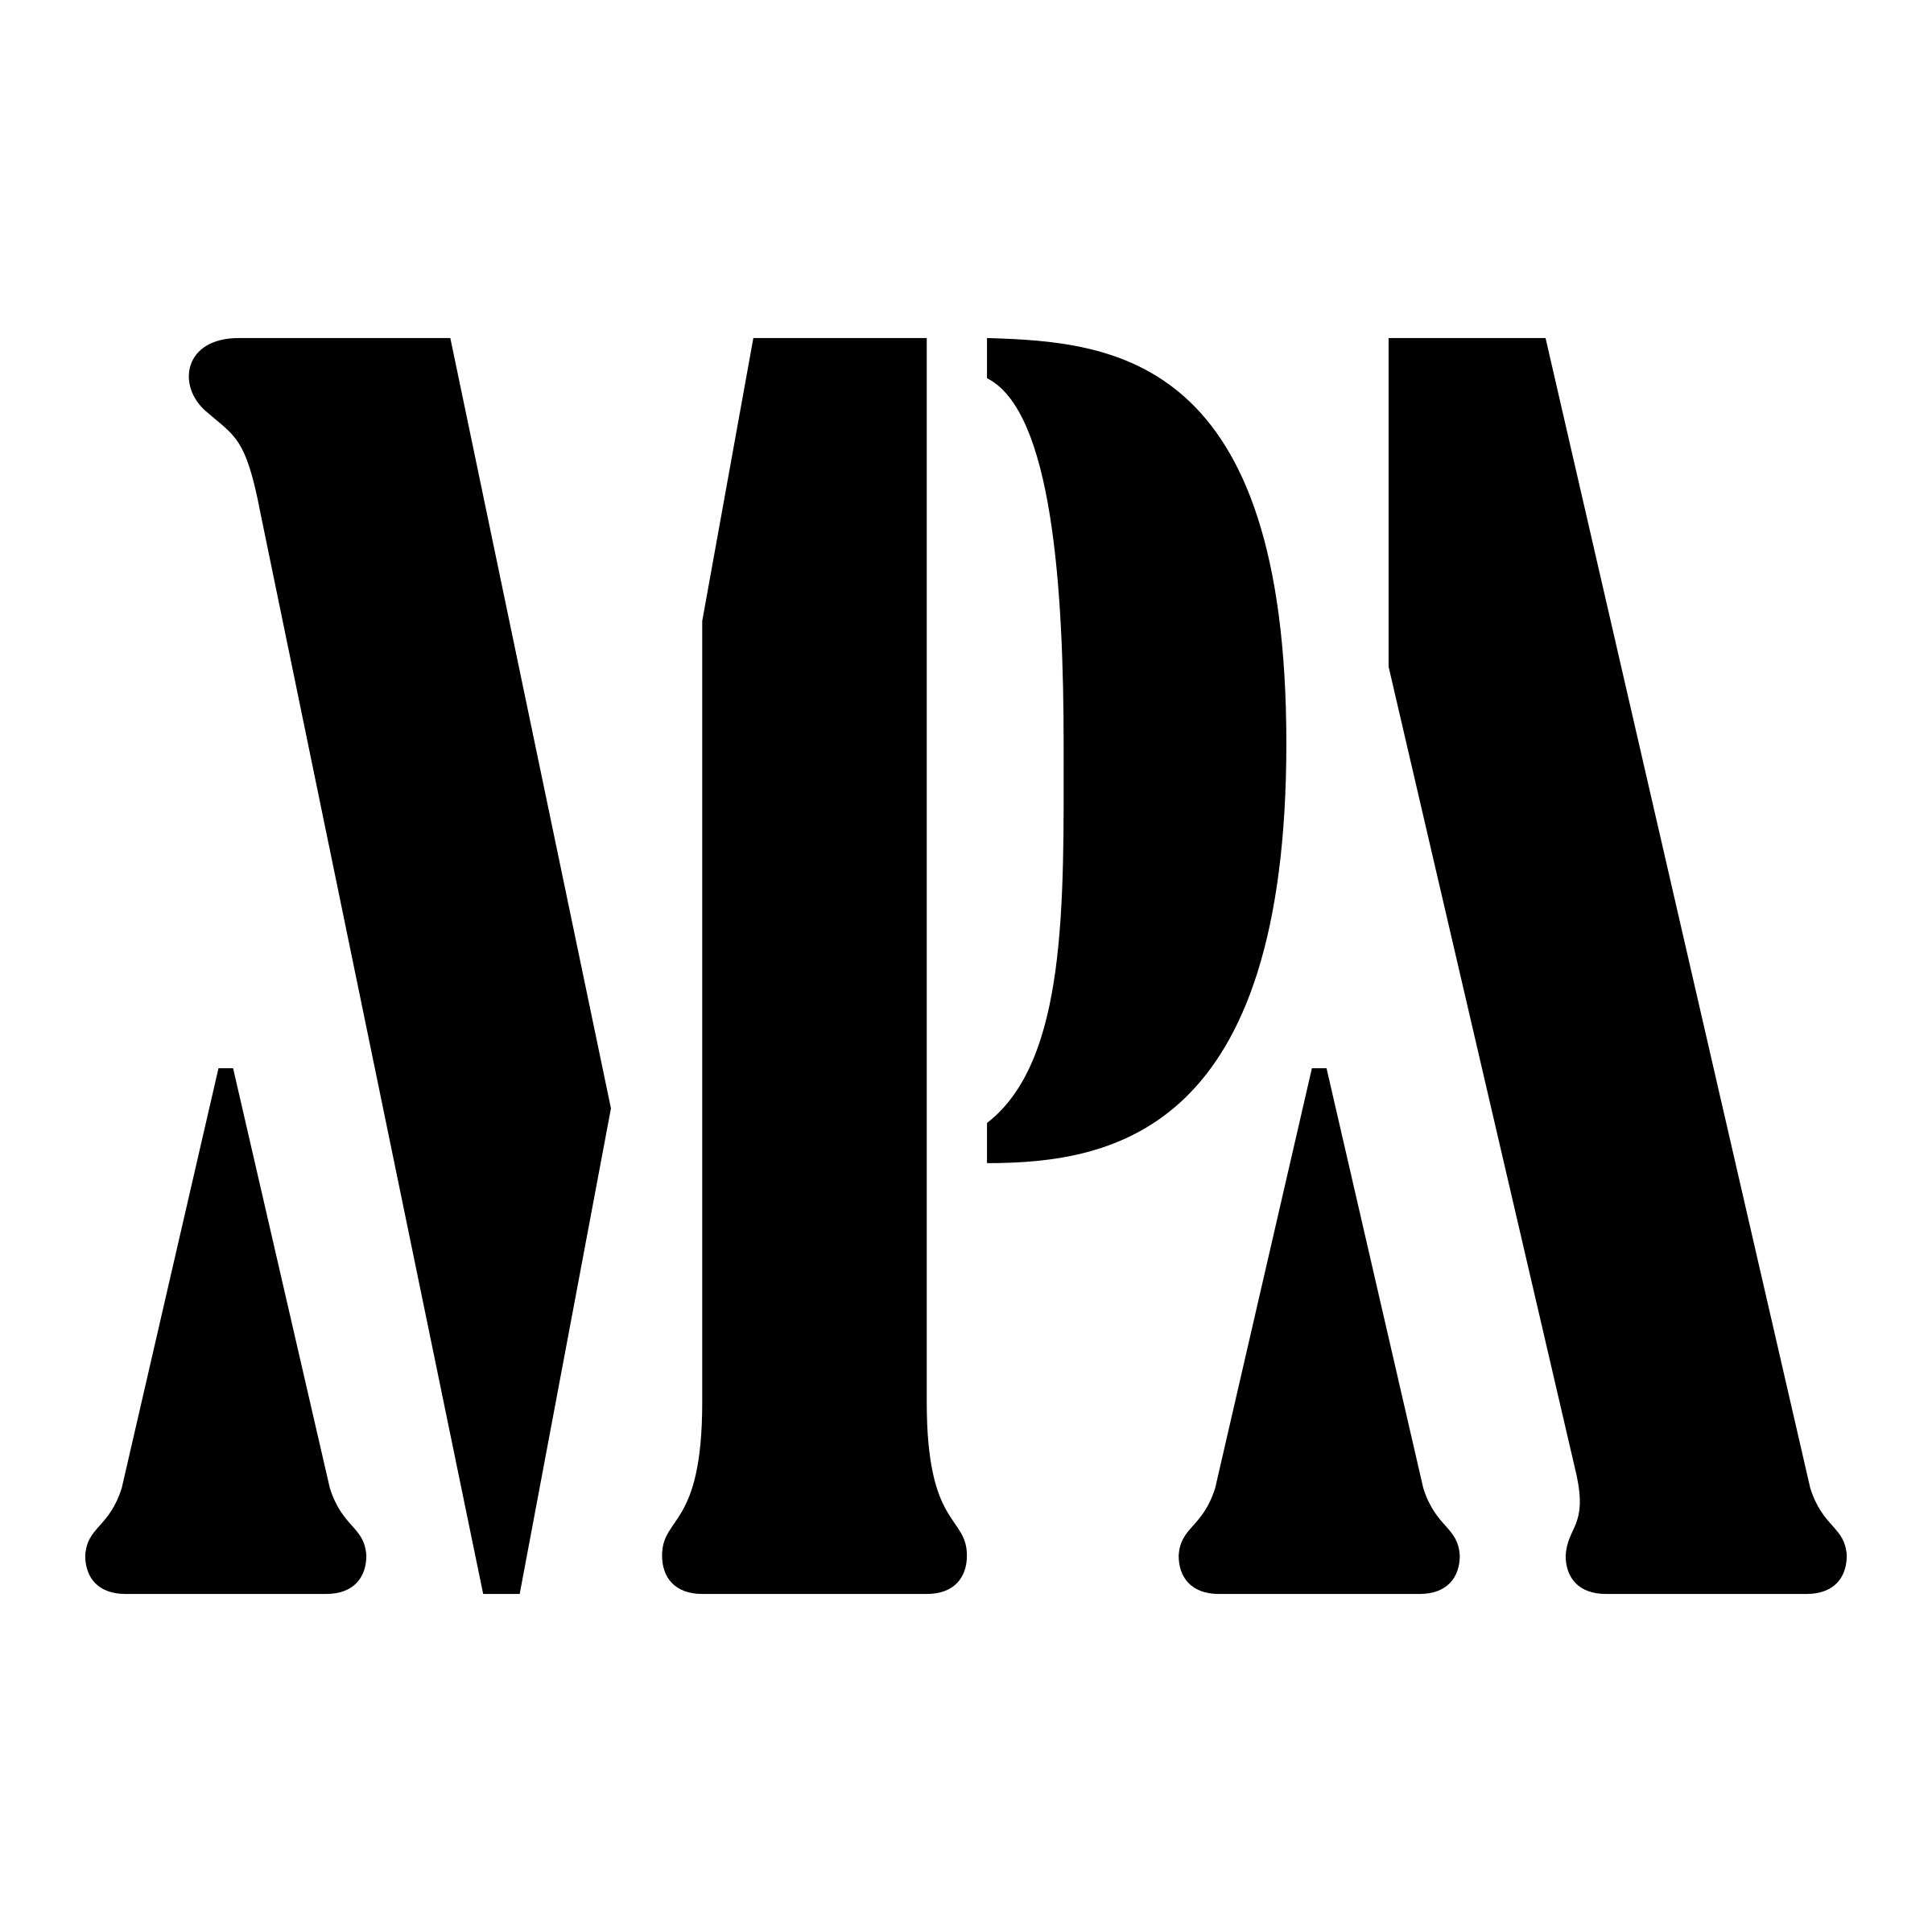 MPA Logo - MPA Logo PNG Transparent & SVG Vector - Freebie Supply